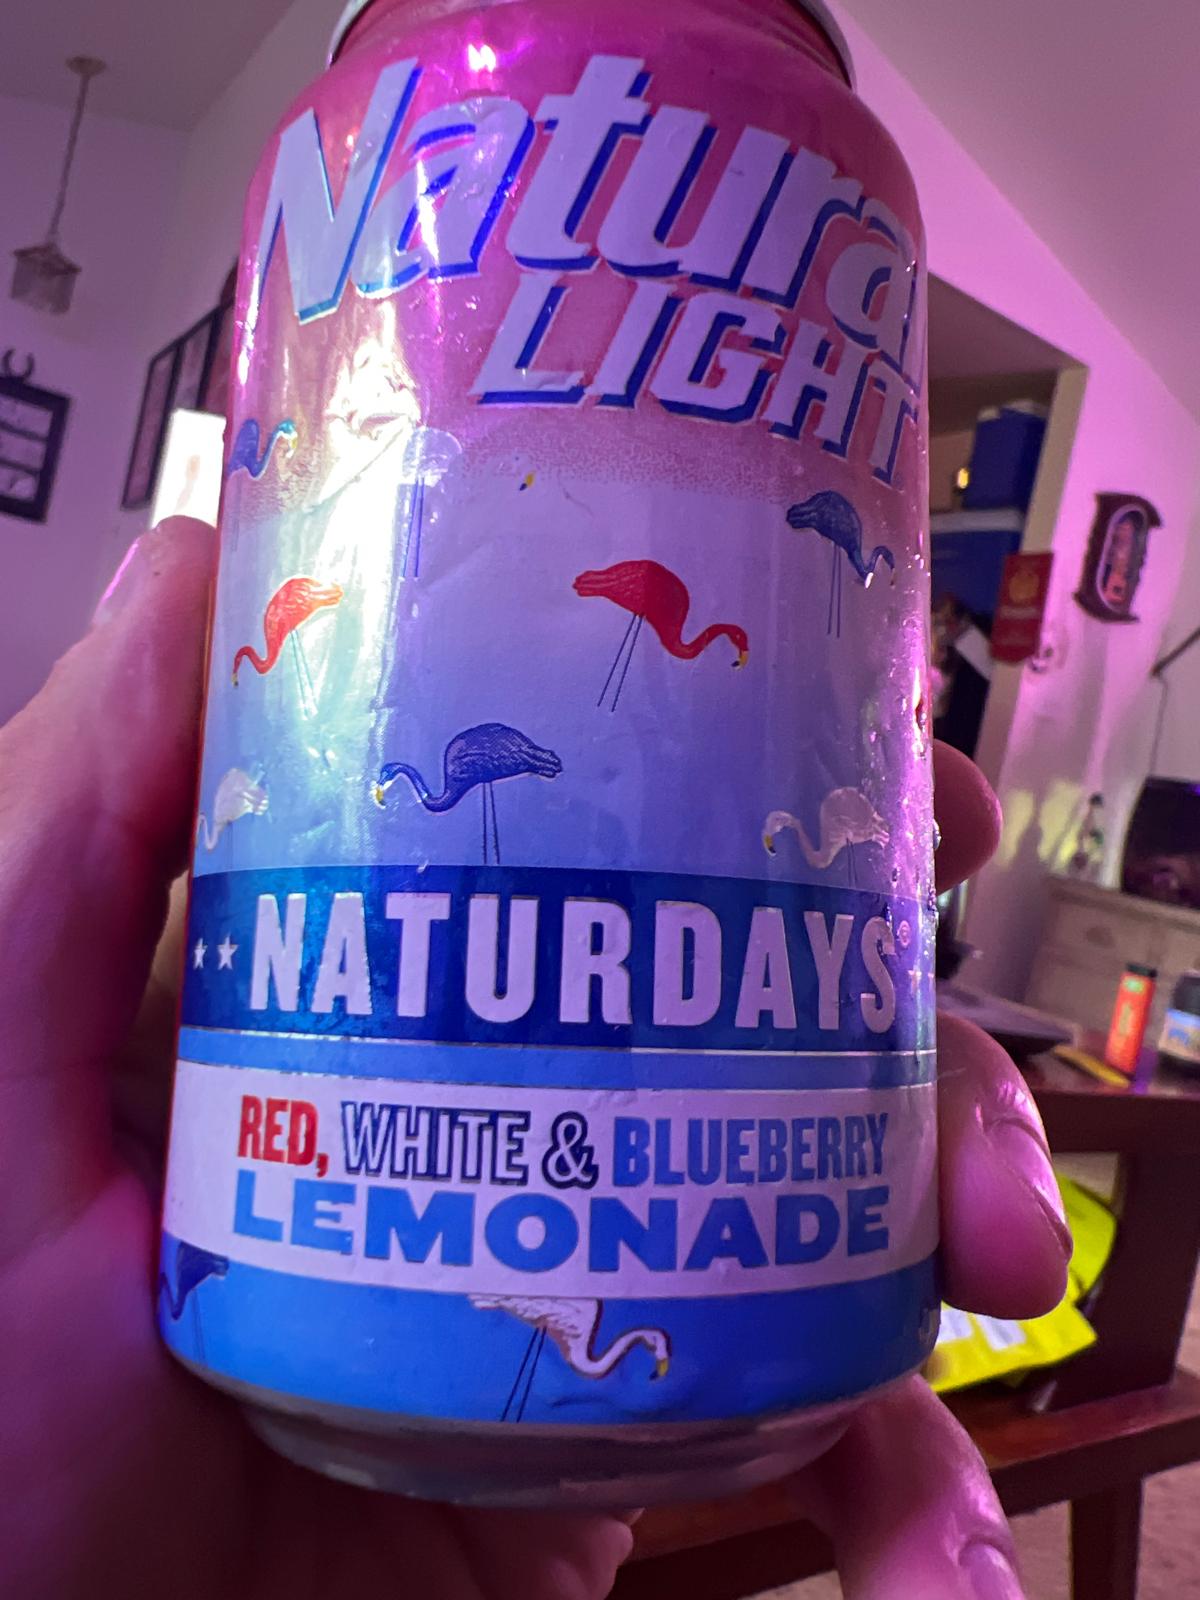 Naturdays Red White & Blueberry Lemonade